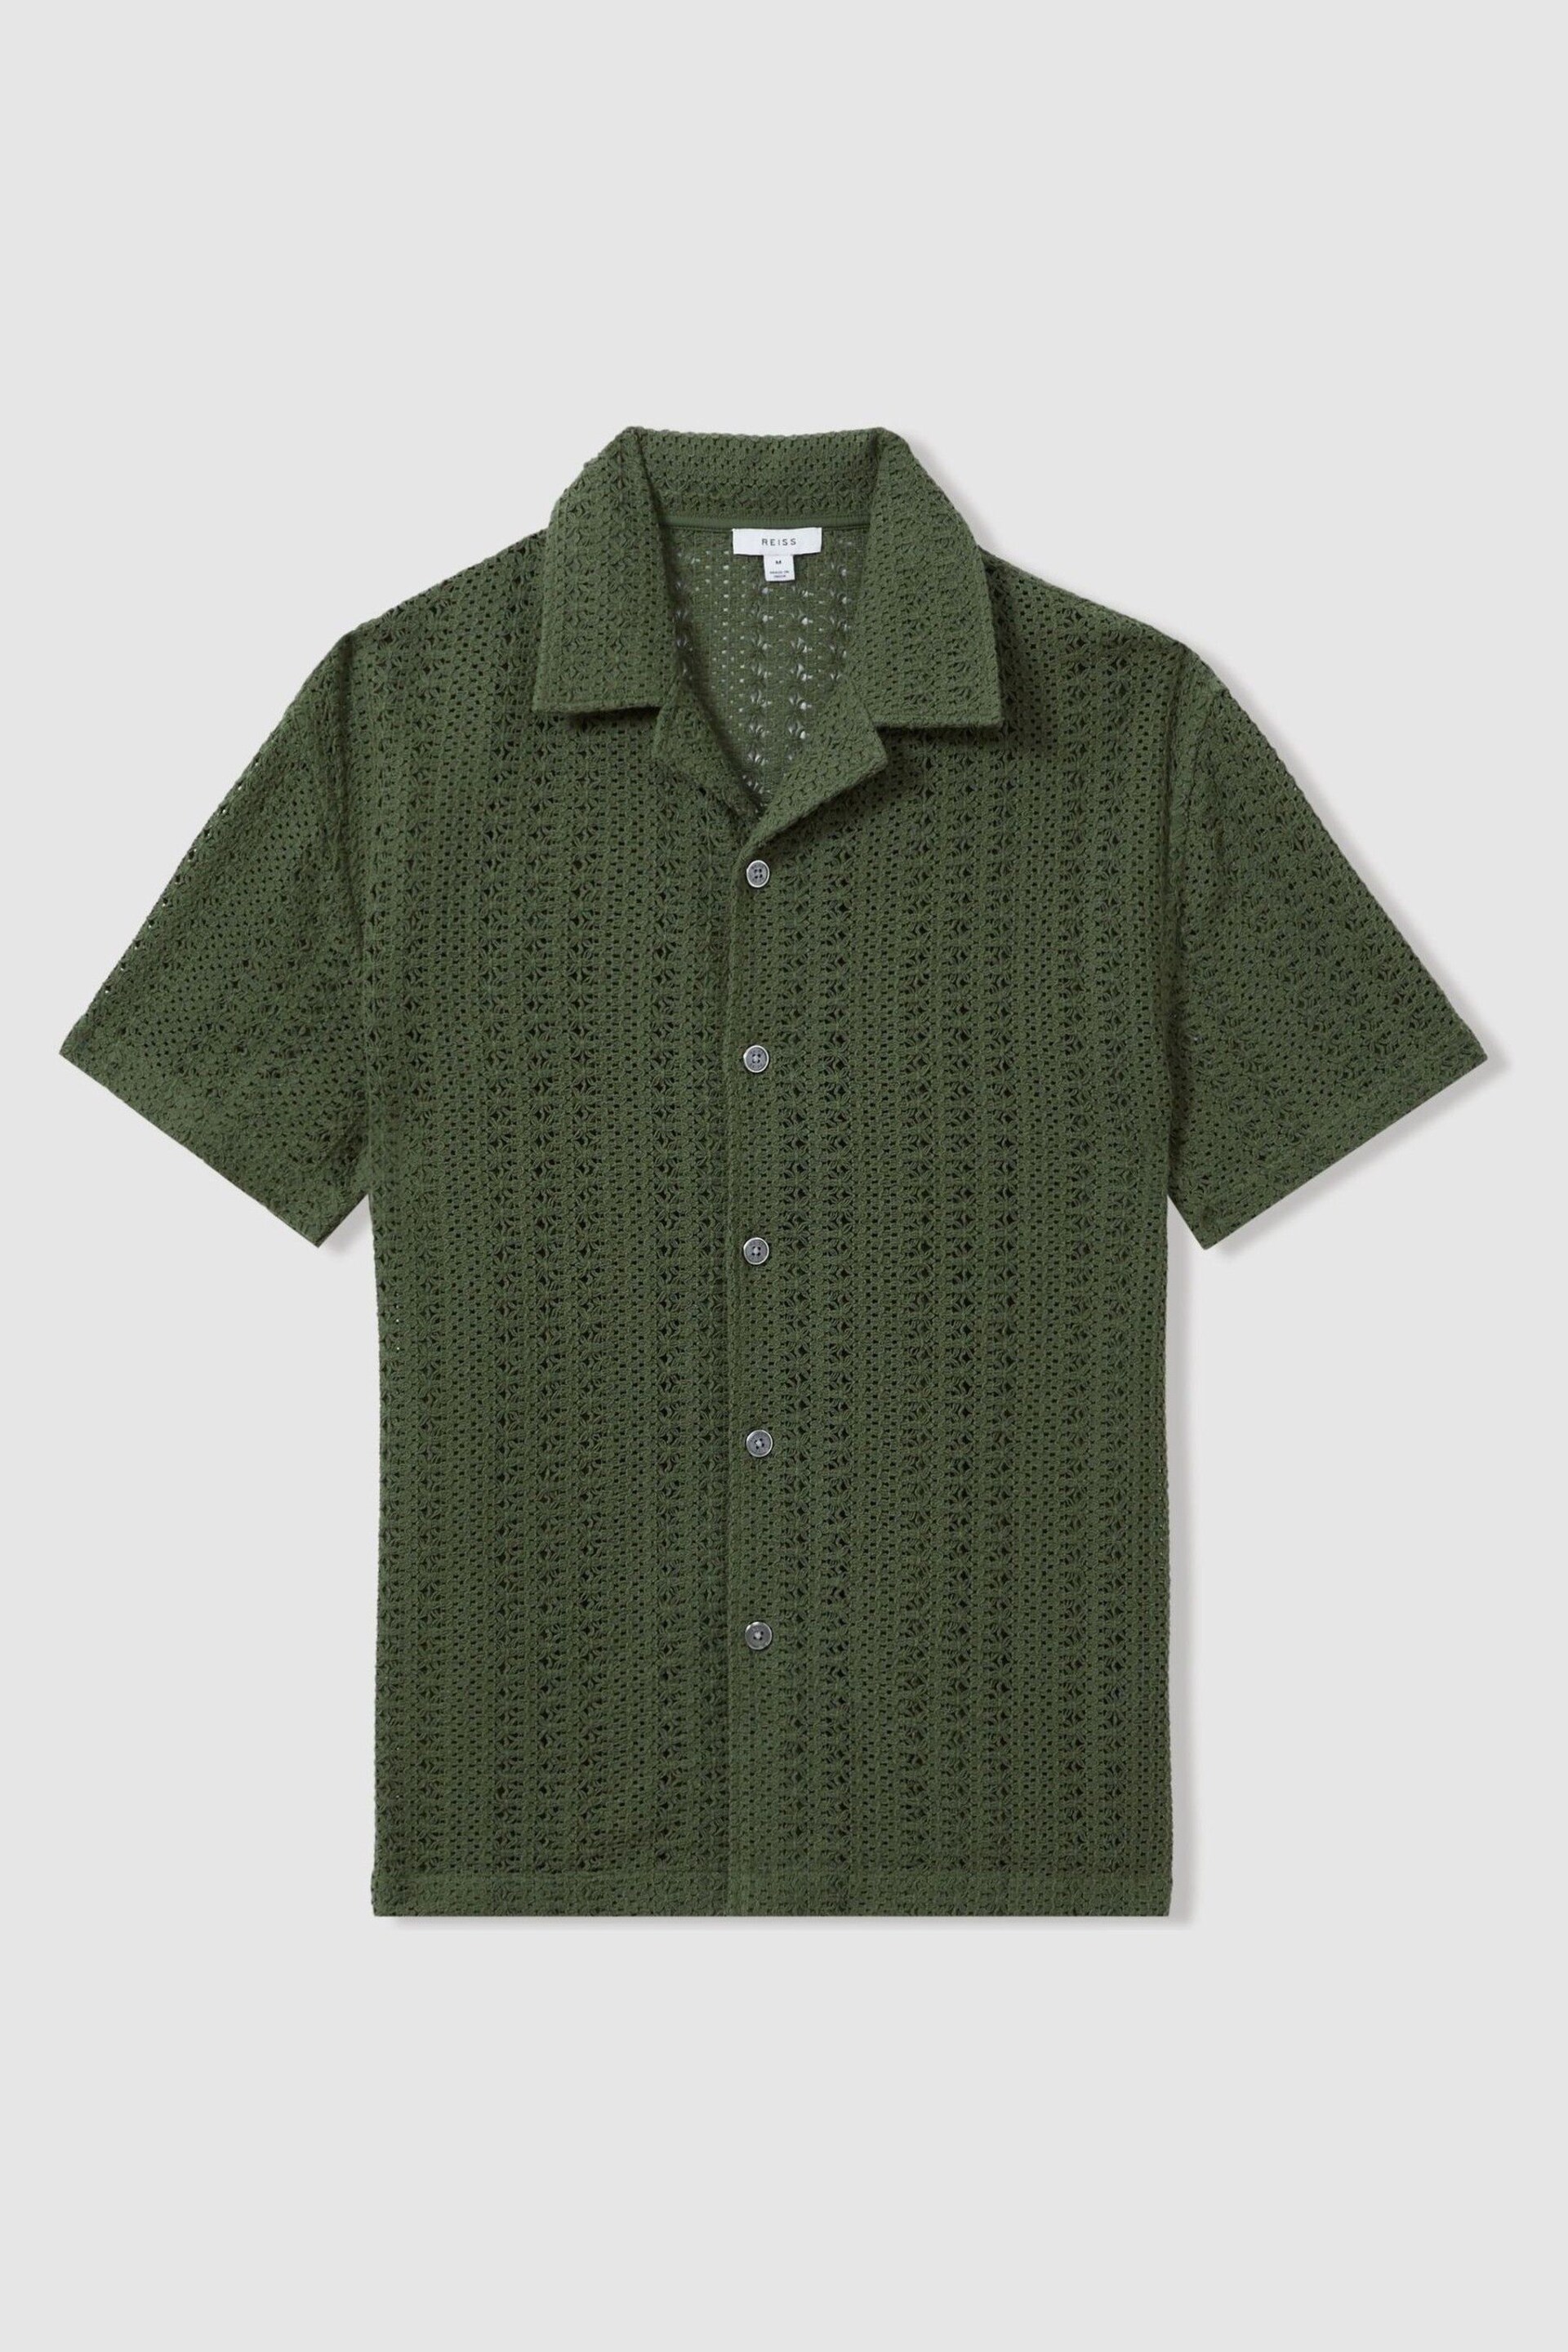 Reiss Olive Green Paradise Cotton Crochet Cuban Collar Shirt - Image 2 of 6